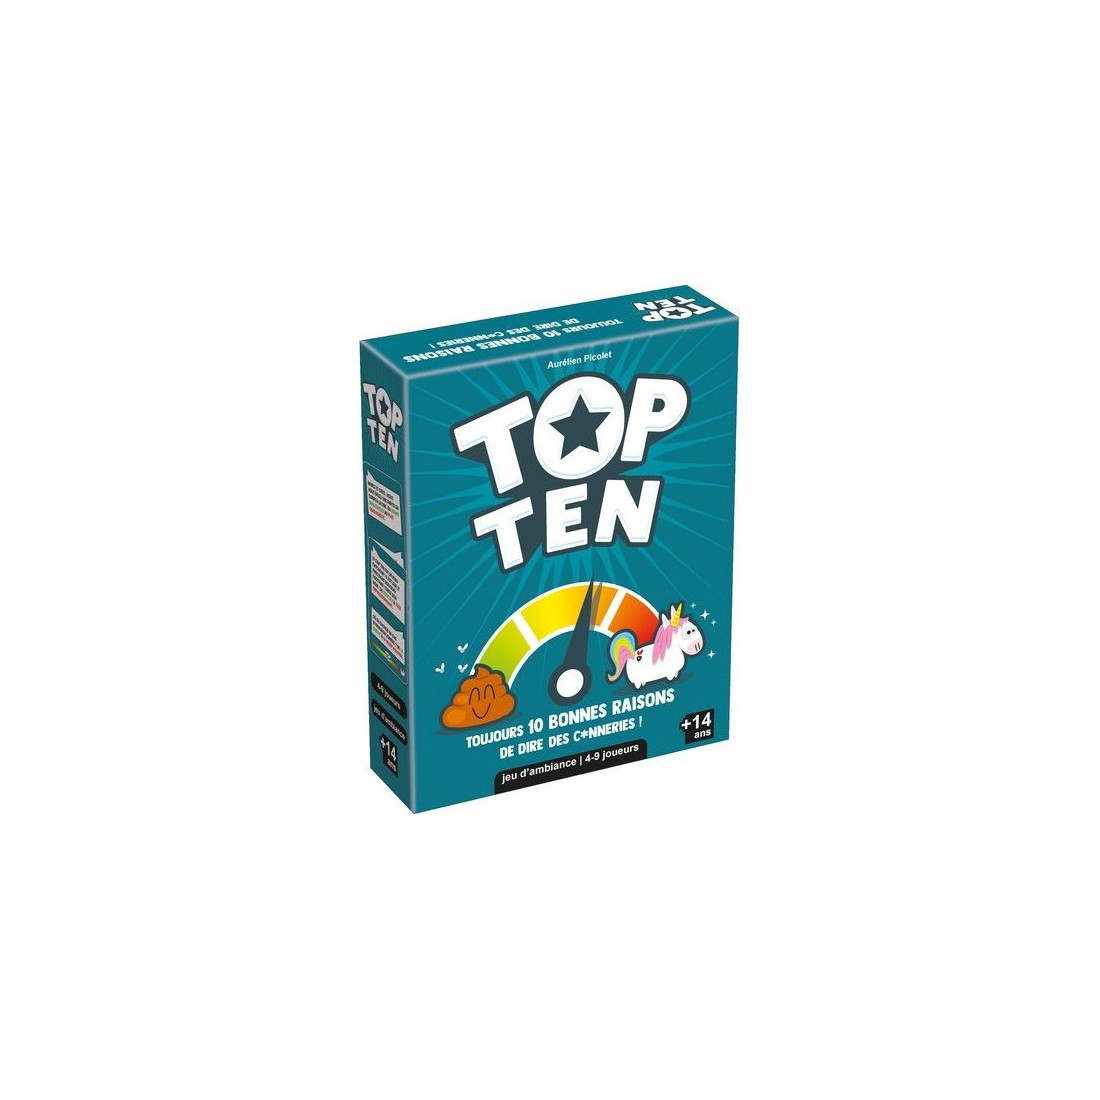 Top Ten Jeu Asmodee - Le jeu d'ambiance Asmodee Dès 14 ans